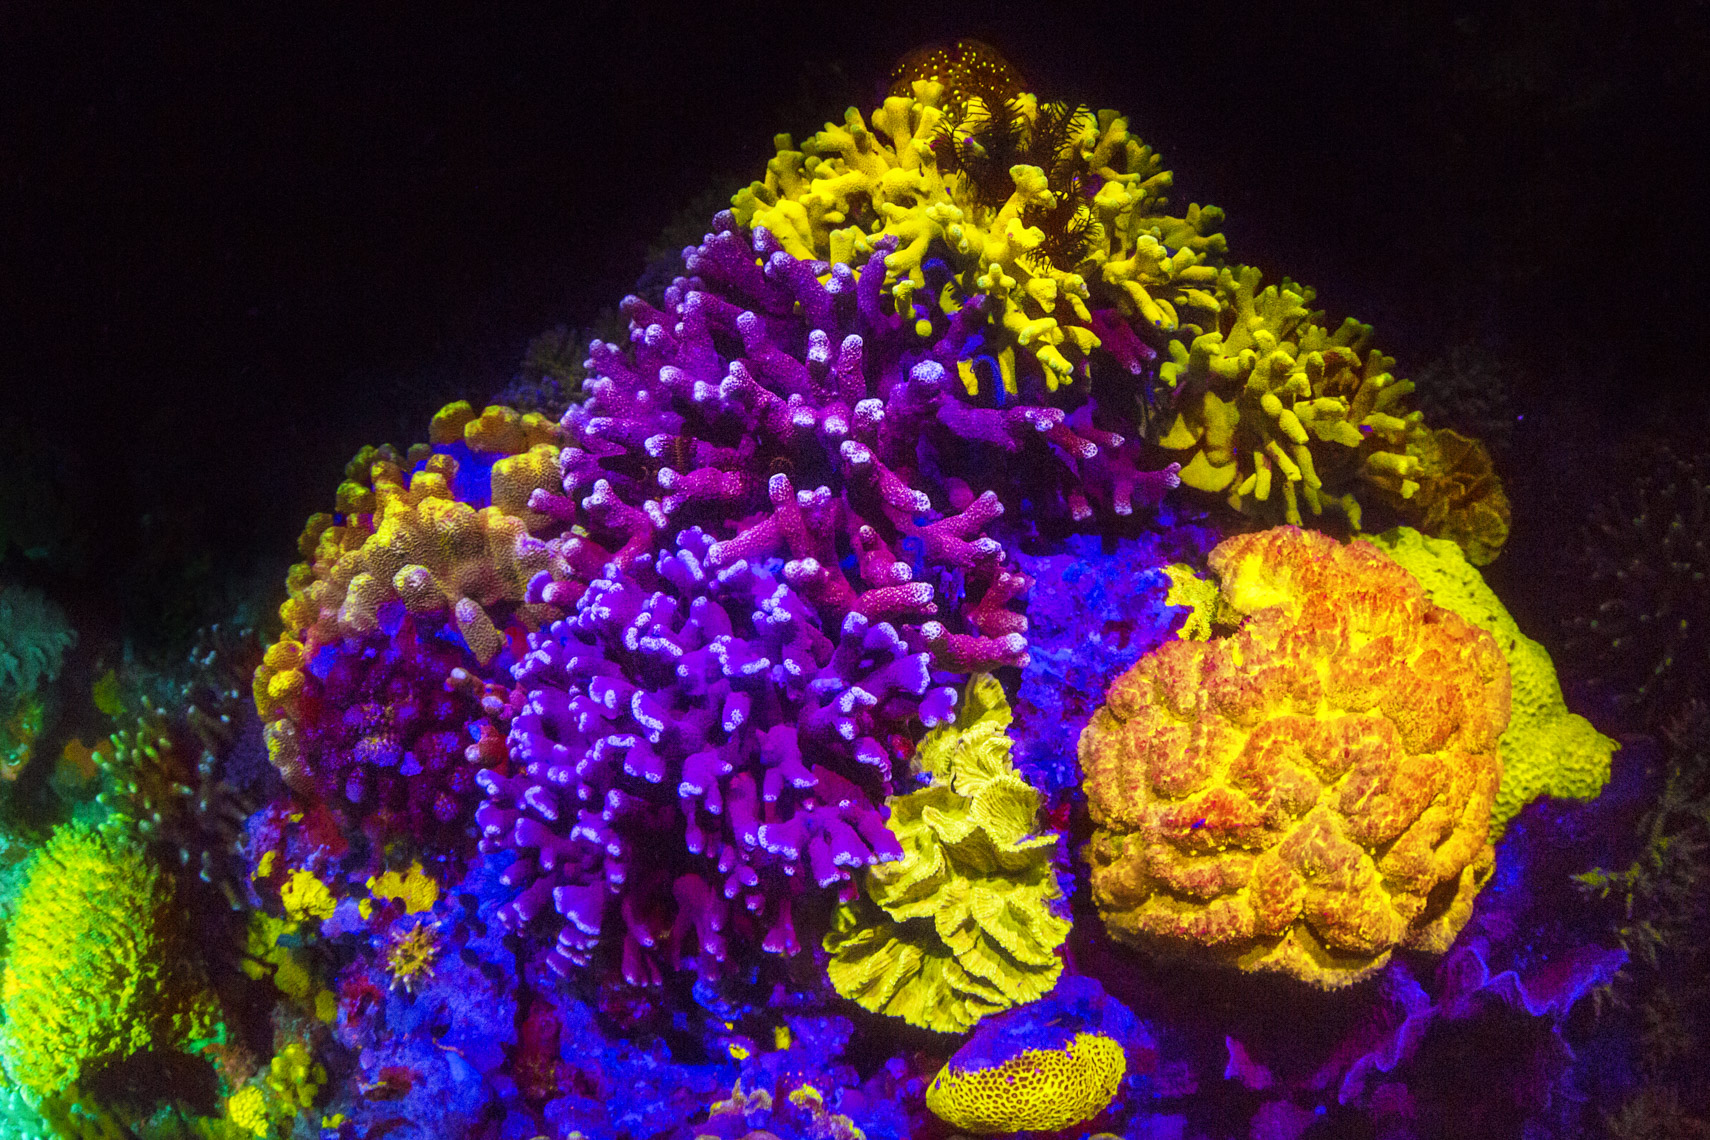 Fluorescent corals